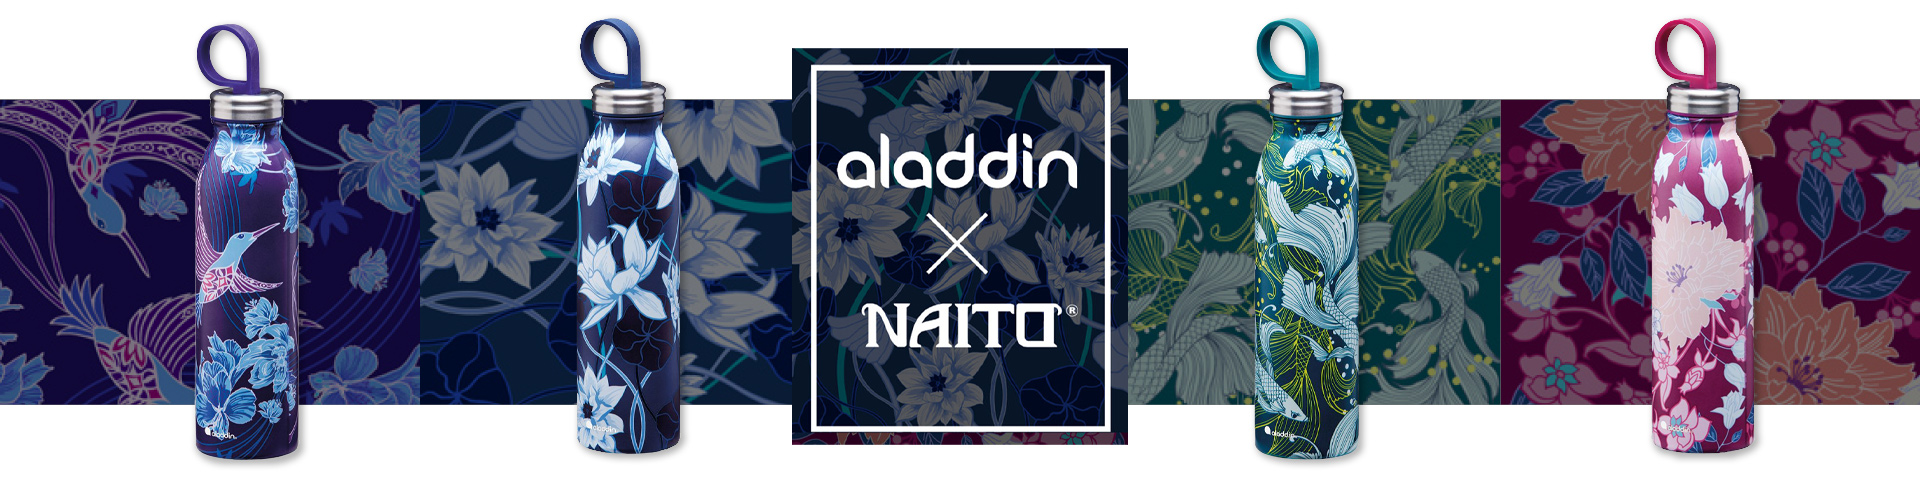 Full-Width-Large-Aladdin-Naito-Desktop.jpg